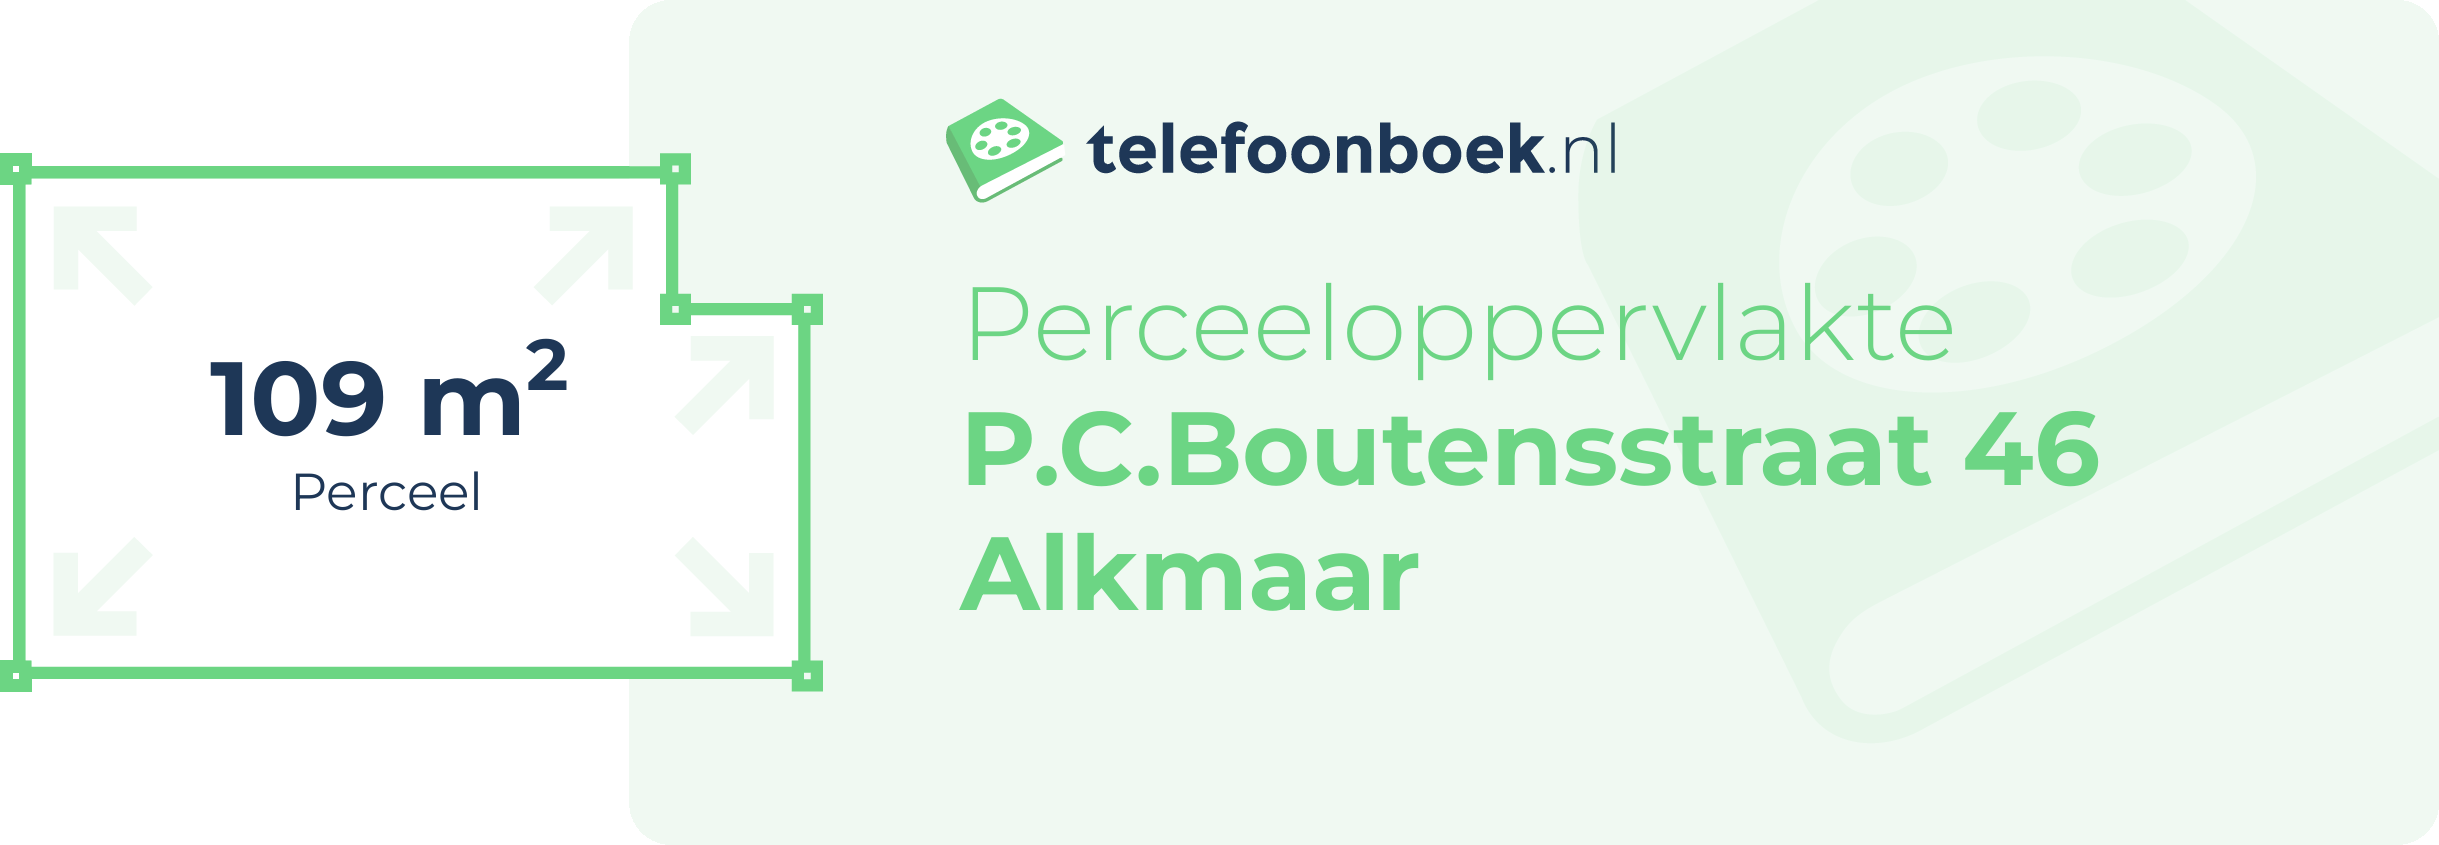 Perceeloppervlakte P.C.Boutensstraat 46 Alkmaar